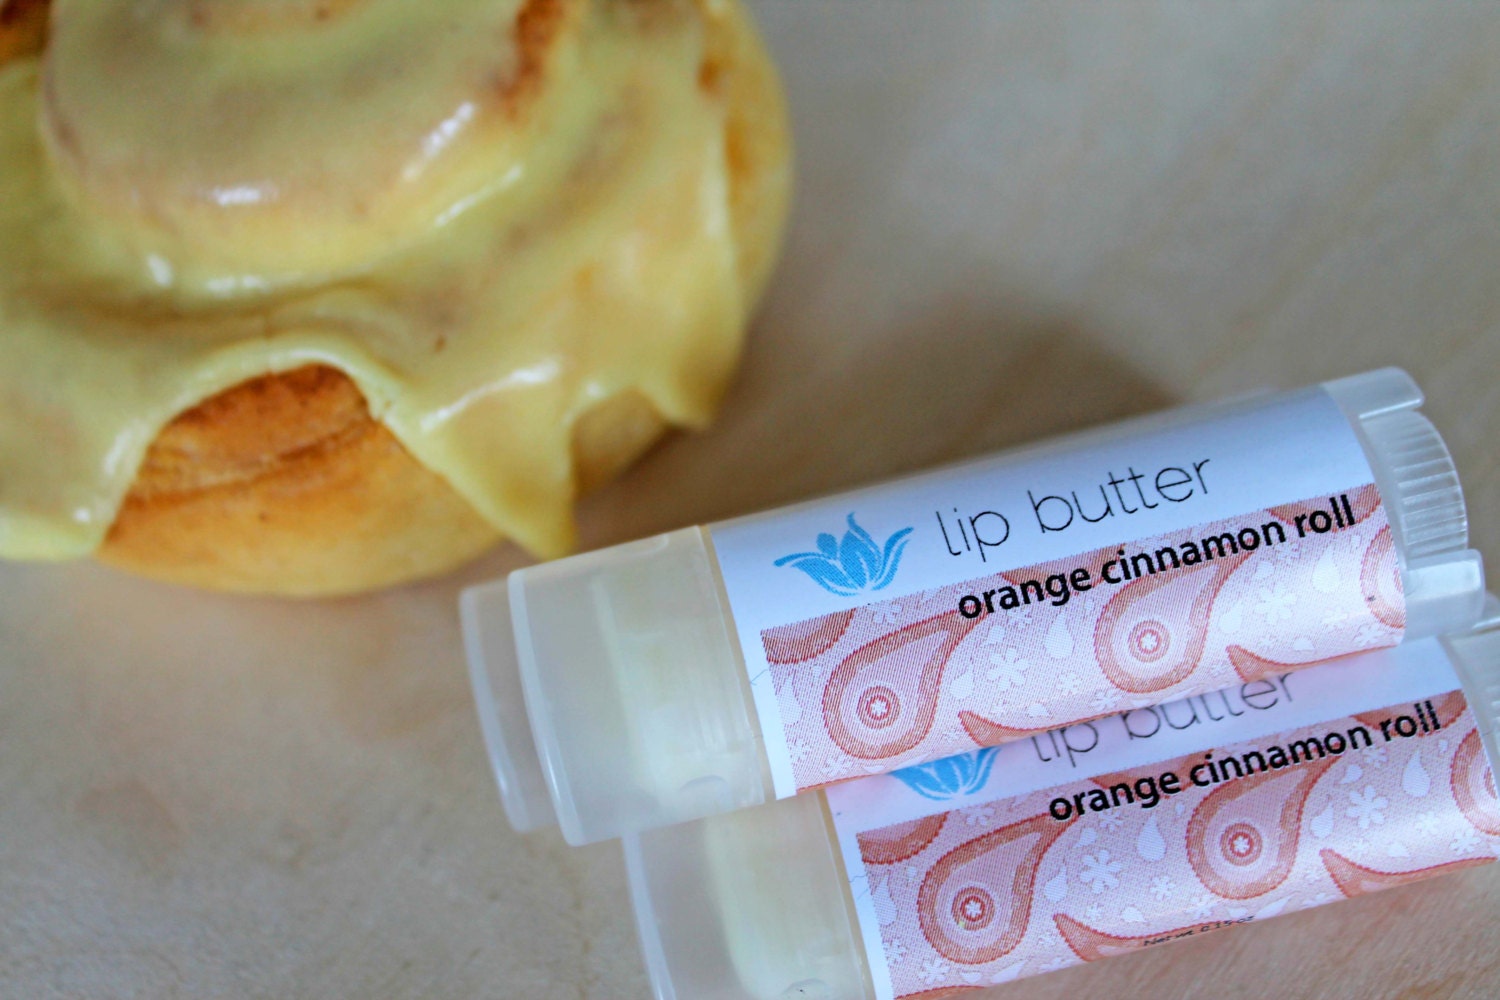 Orange Cinnamon Roll lip butter, Fall 2013 Collection, natural vegan gluten-free lip balm